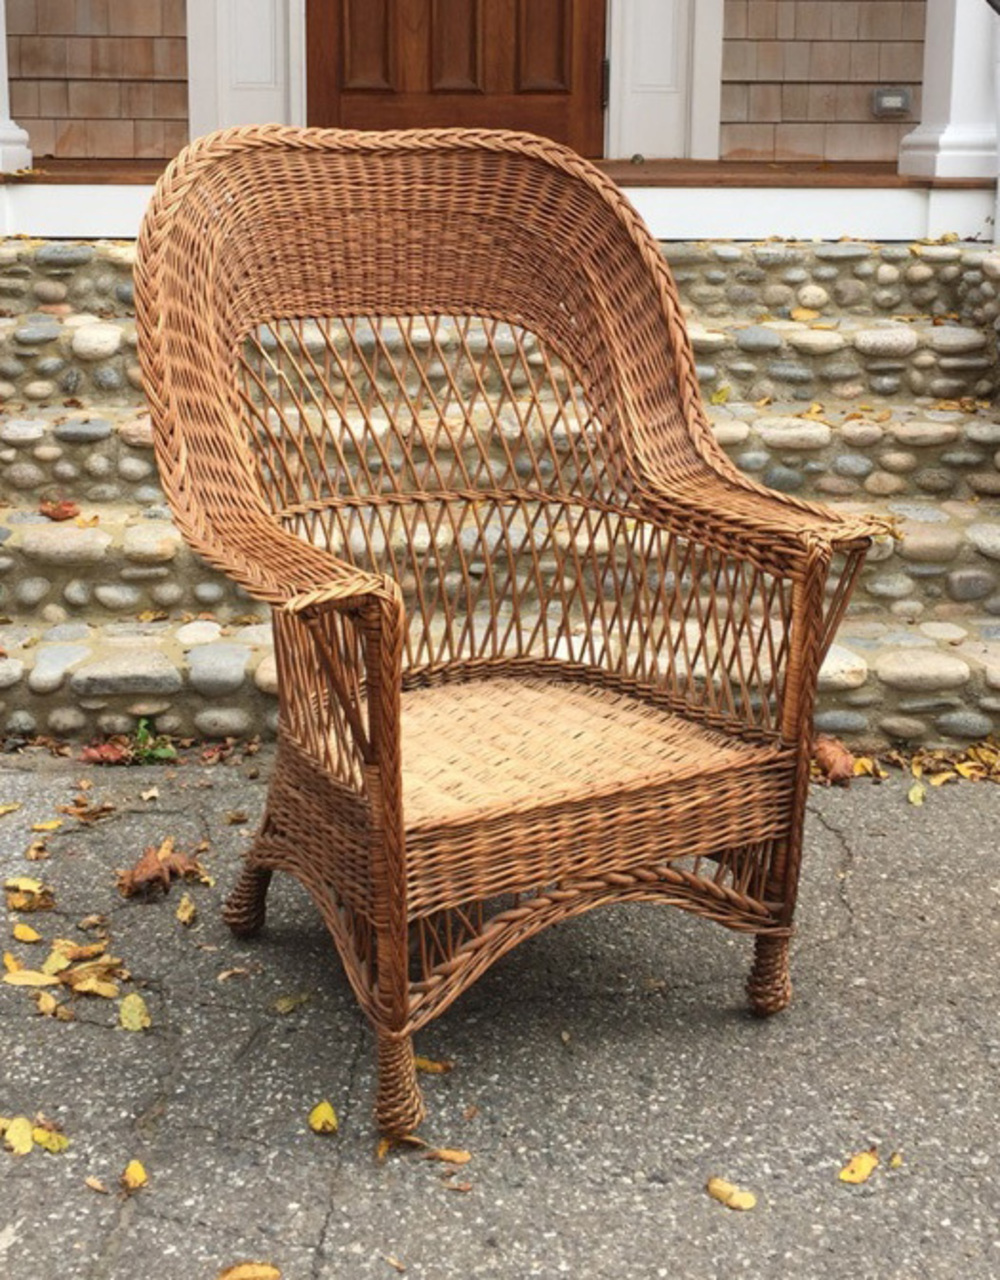 Antique Wicker Chair The Wicker Shop